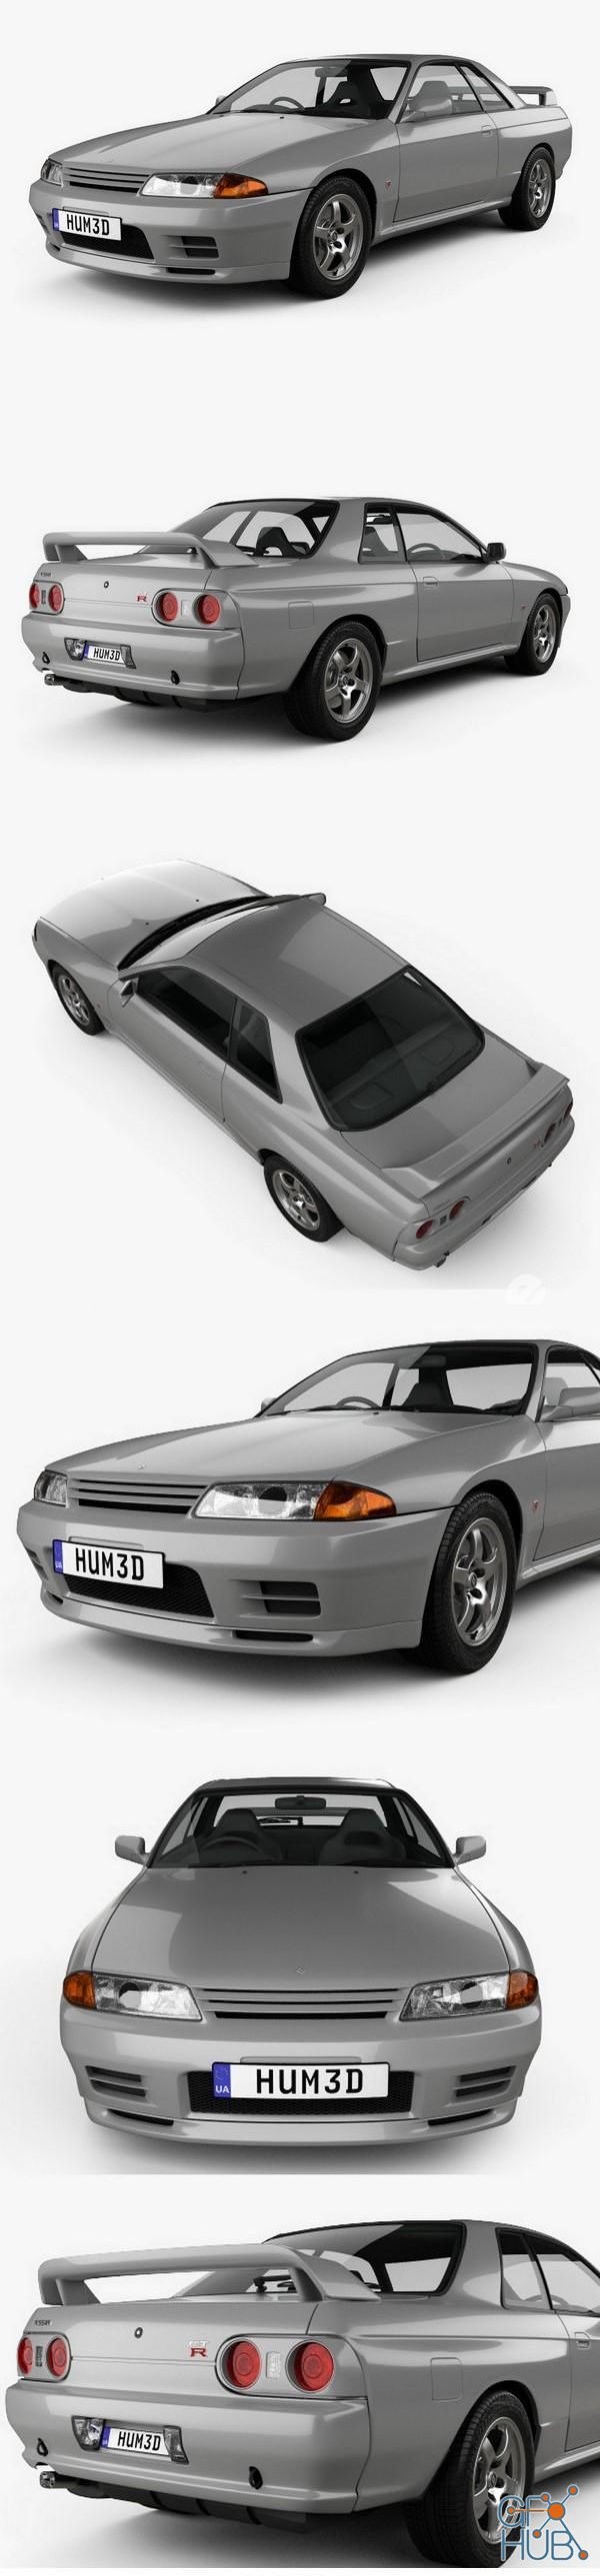 Hum 3D Nissan Skyline (R32) GT-R coupe 1989